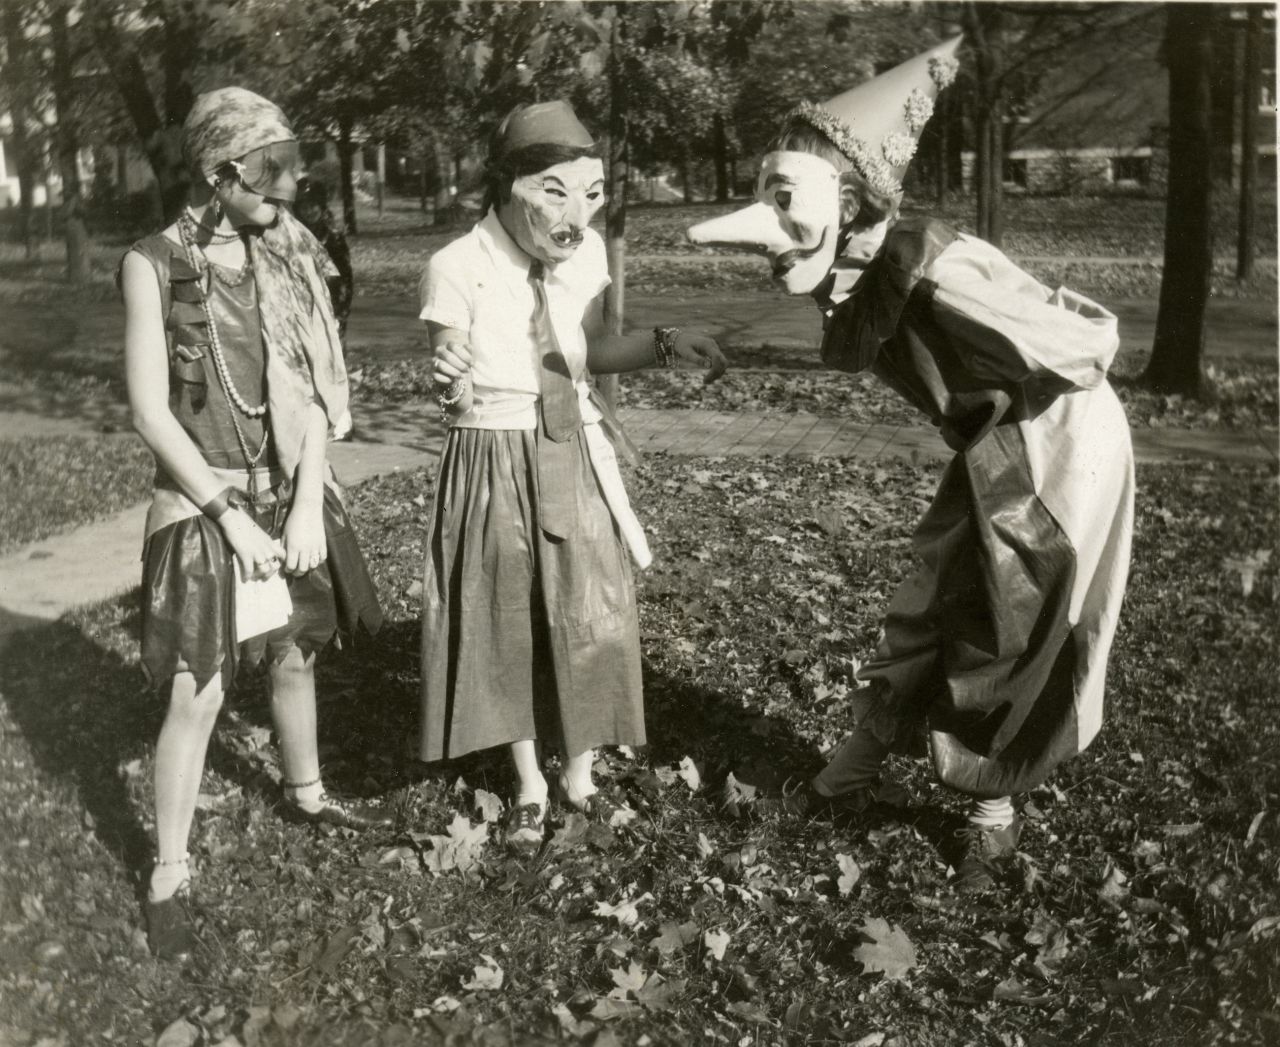 Three girls prepare for Halloween festivities in the College Hill neighborhood of Cincinnati, Ohio, 1929.